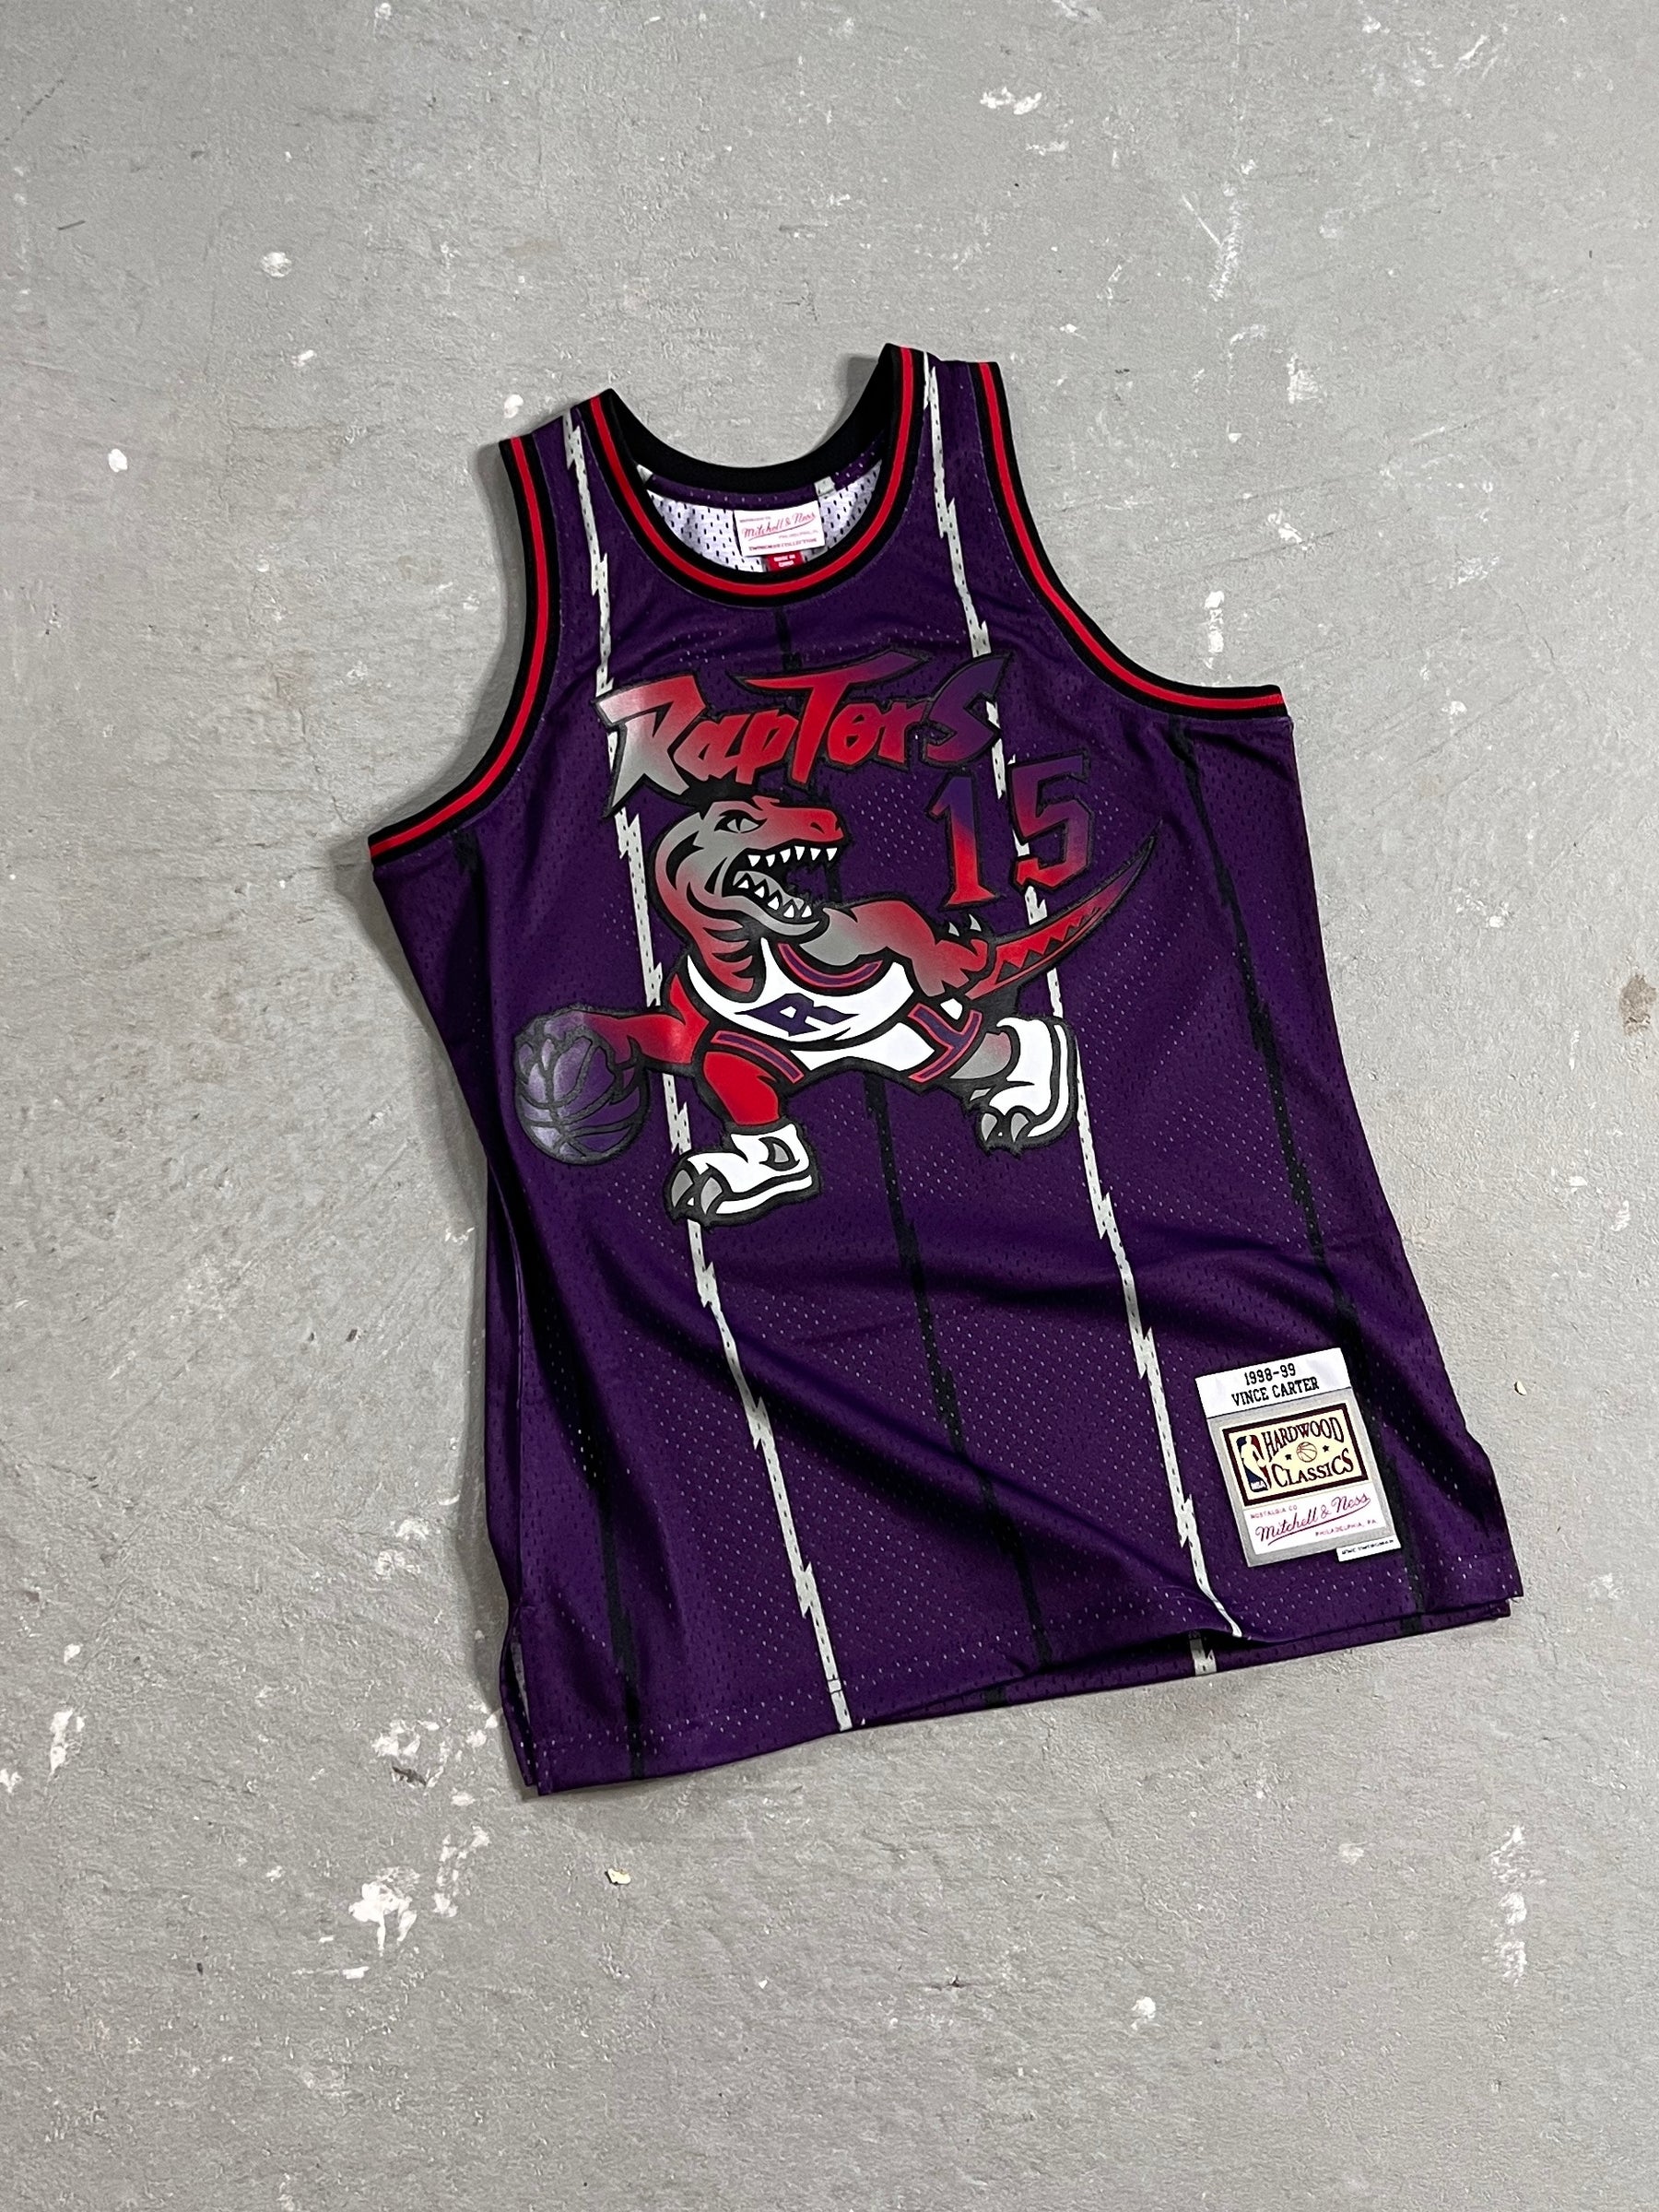 Toronto Raptors Big Face 7.0 Swingman Jersey 1998 Vince Carter - Purple